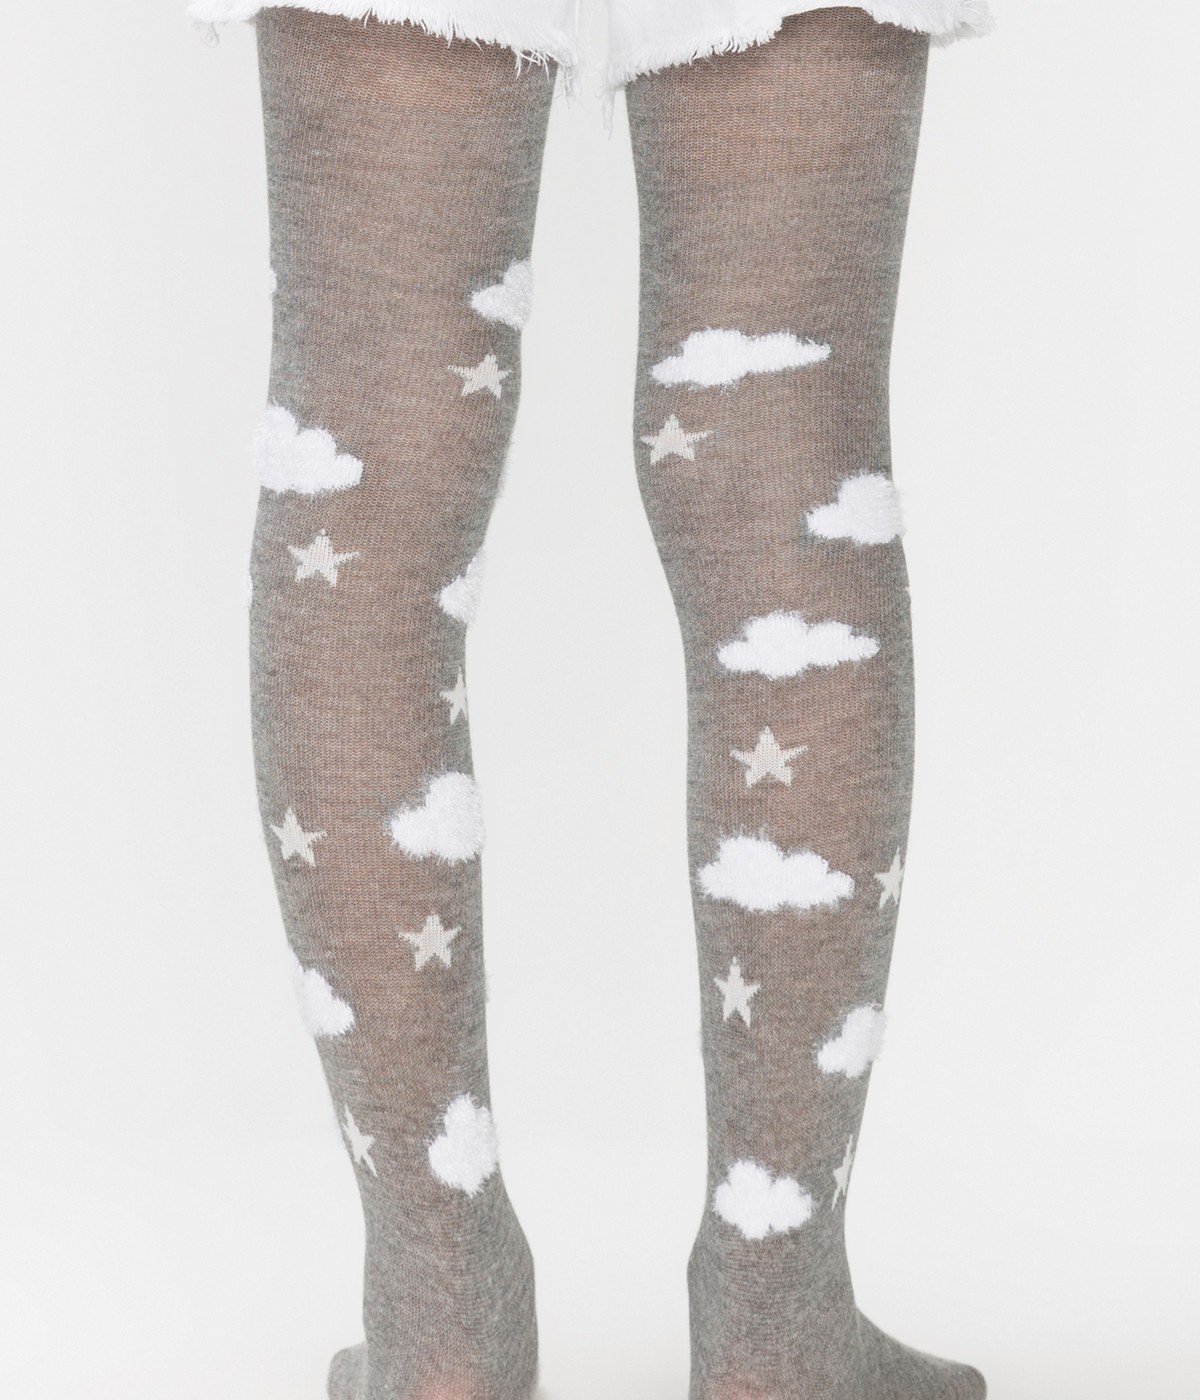 Ciorapi cu chilot pentru fete Clouds